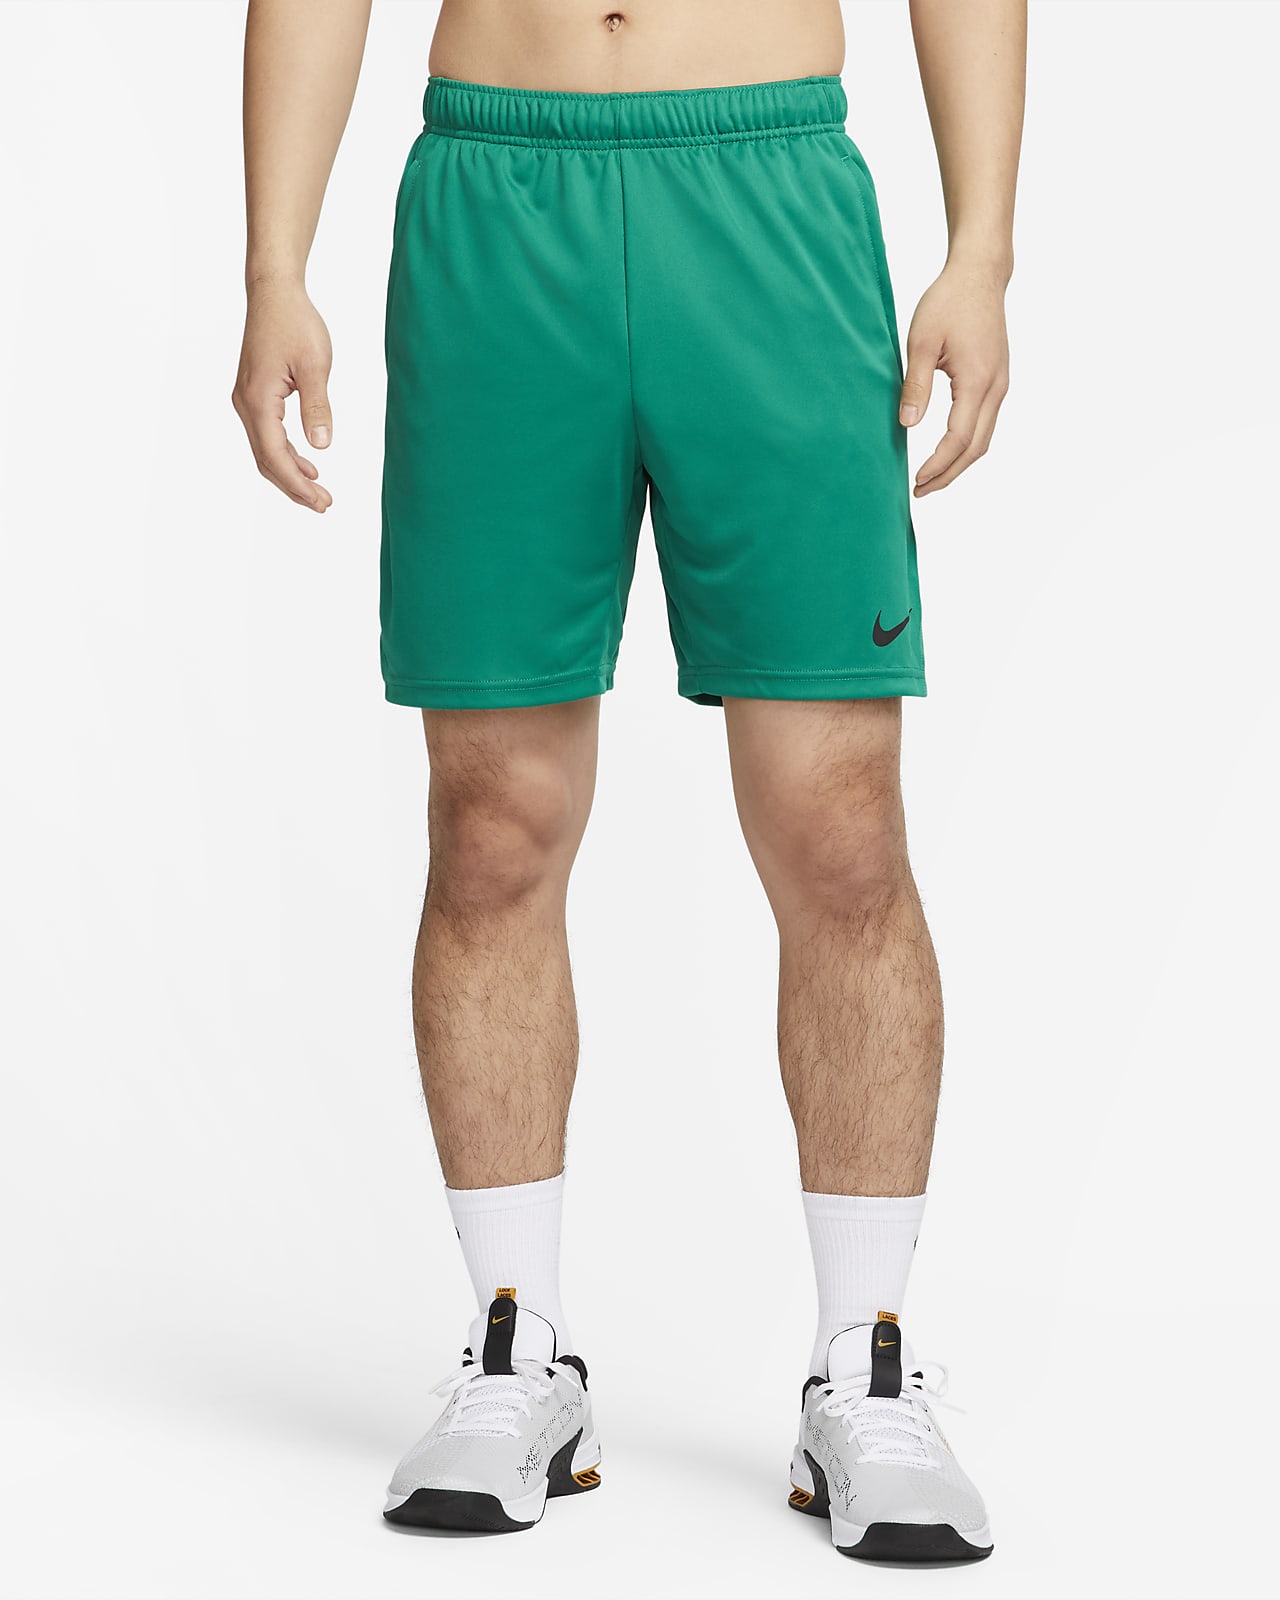 Nike Dri-FIT Epic 男款針織訓練短褲